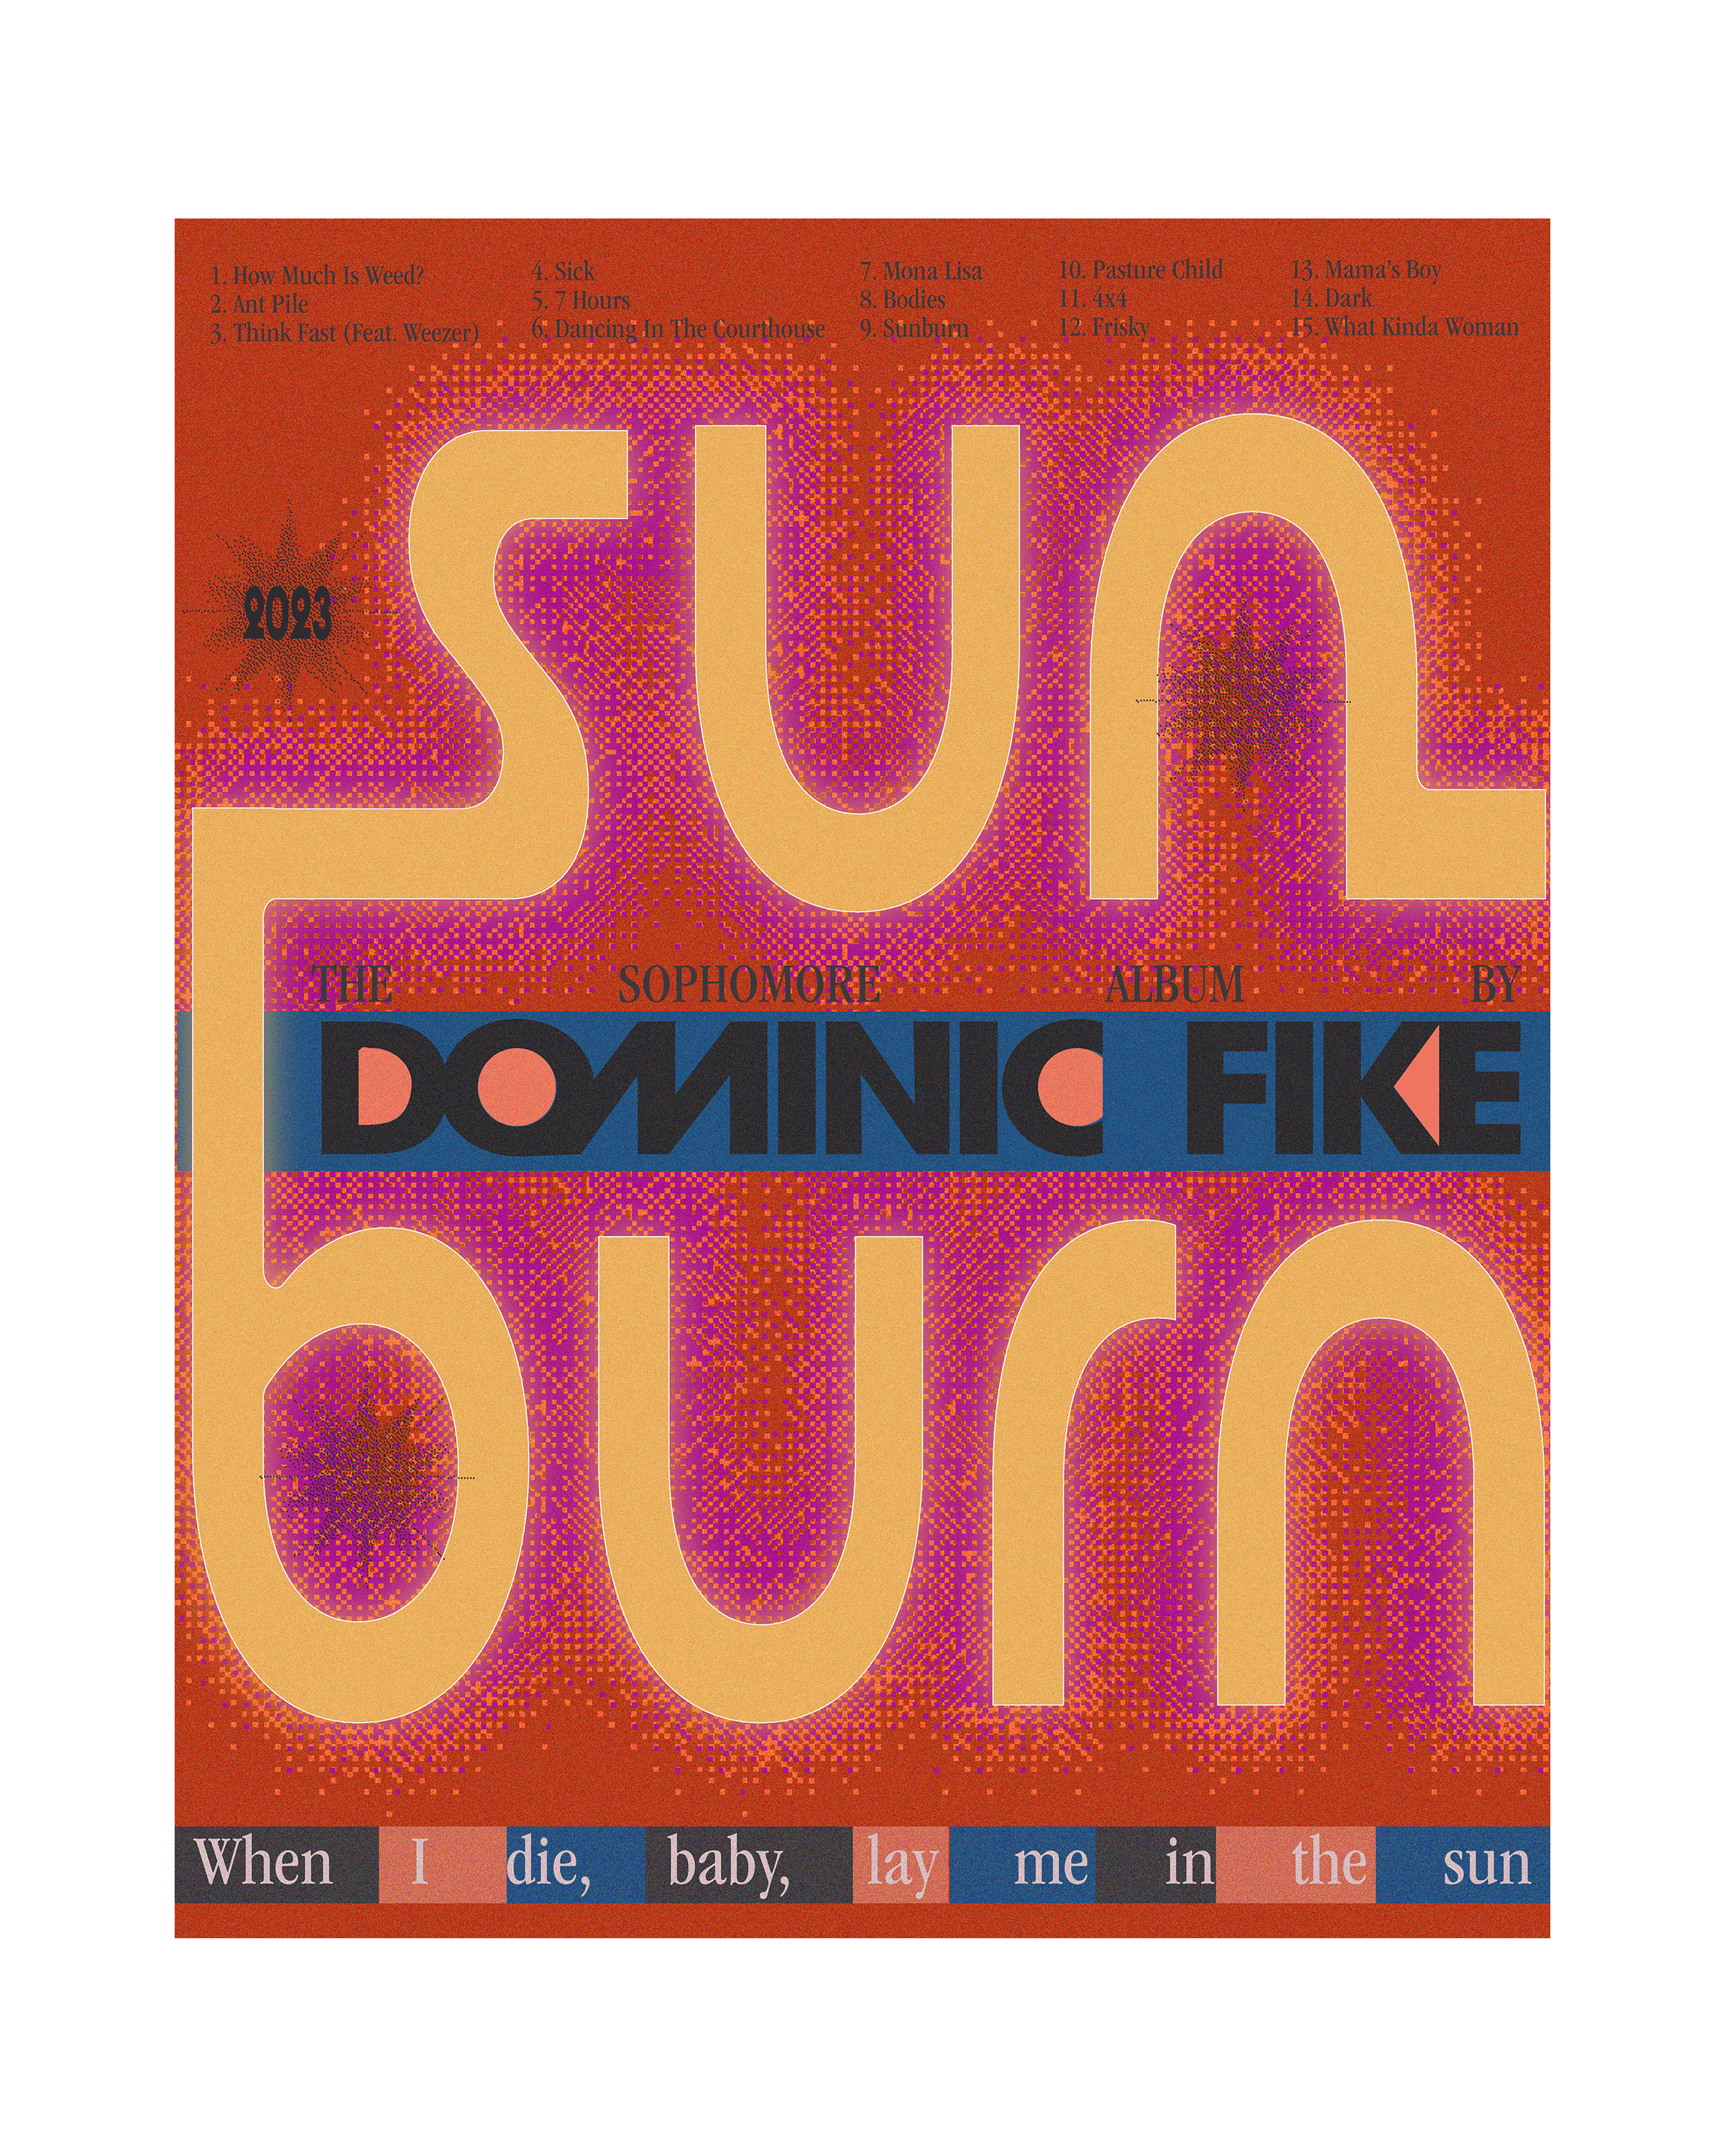  Dominic Fike —  Sunburn  Album Poster *Concept 